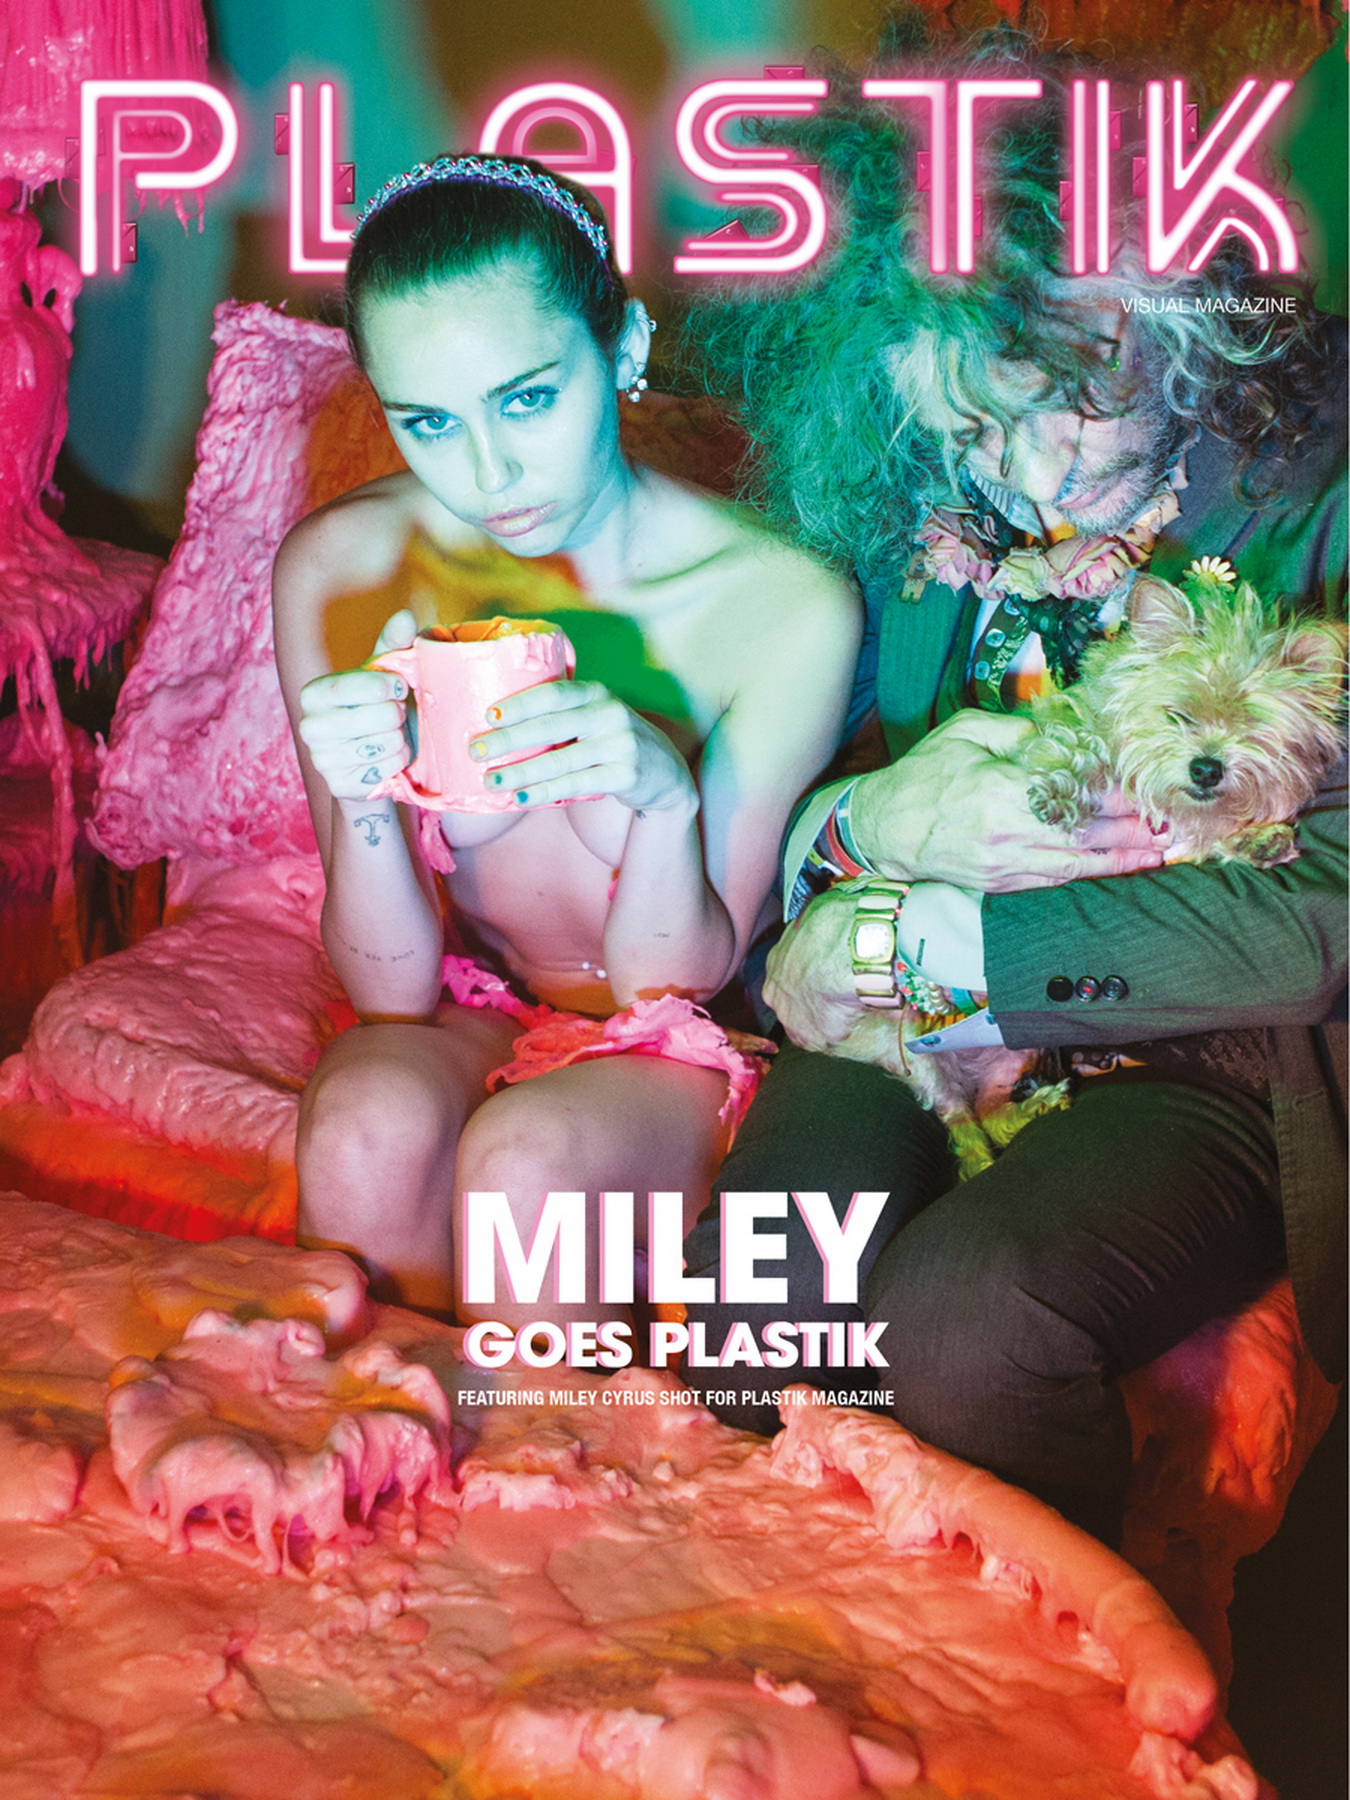 Miley Cyrus nude Plastik magazine 6x HQ covers 8.jpg